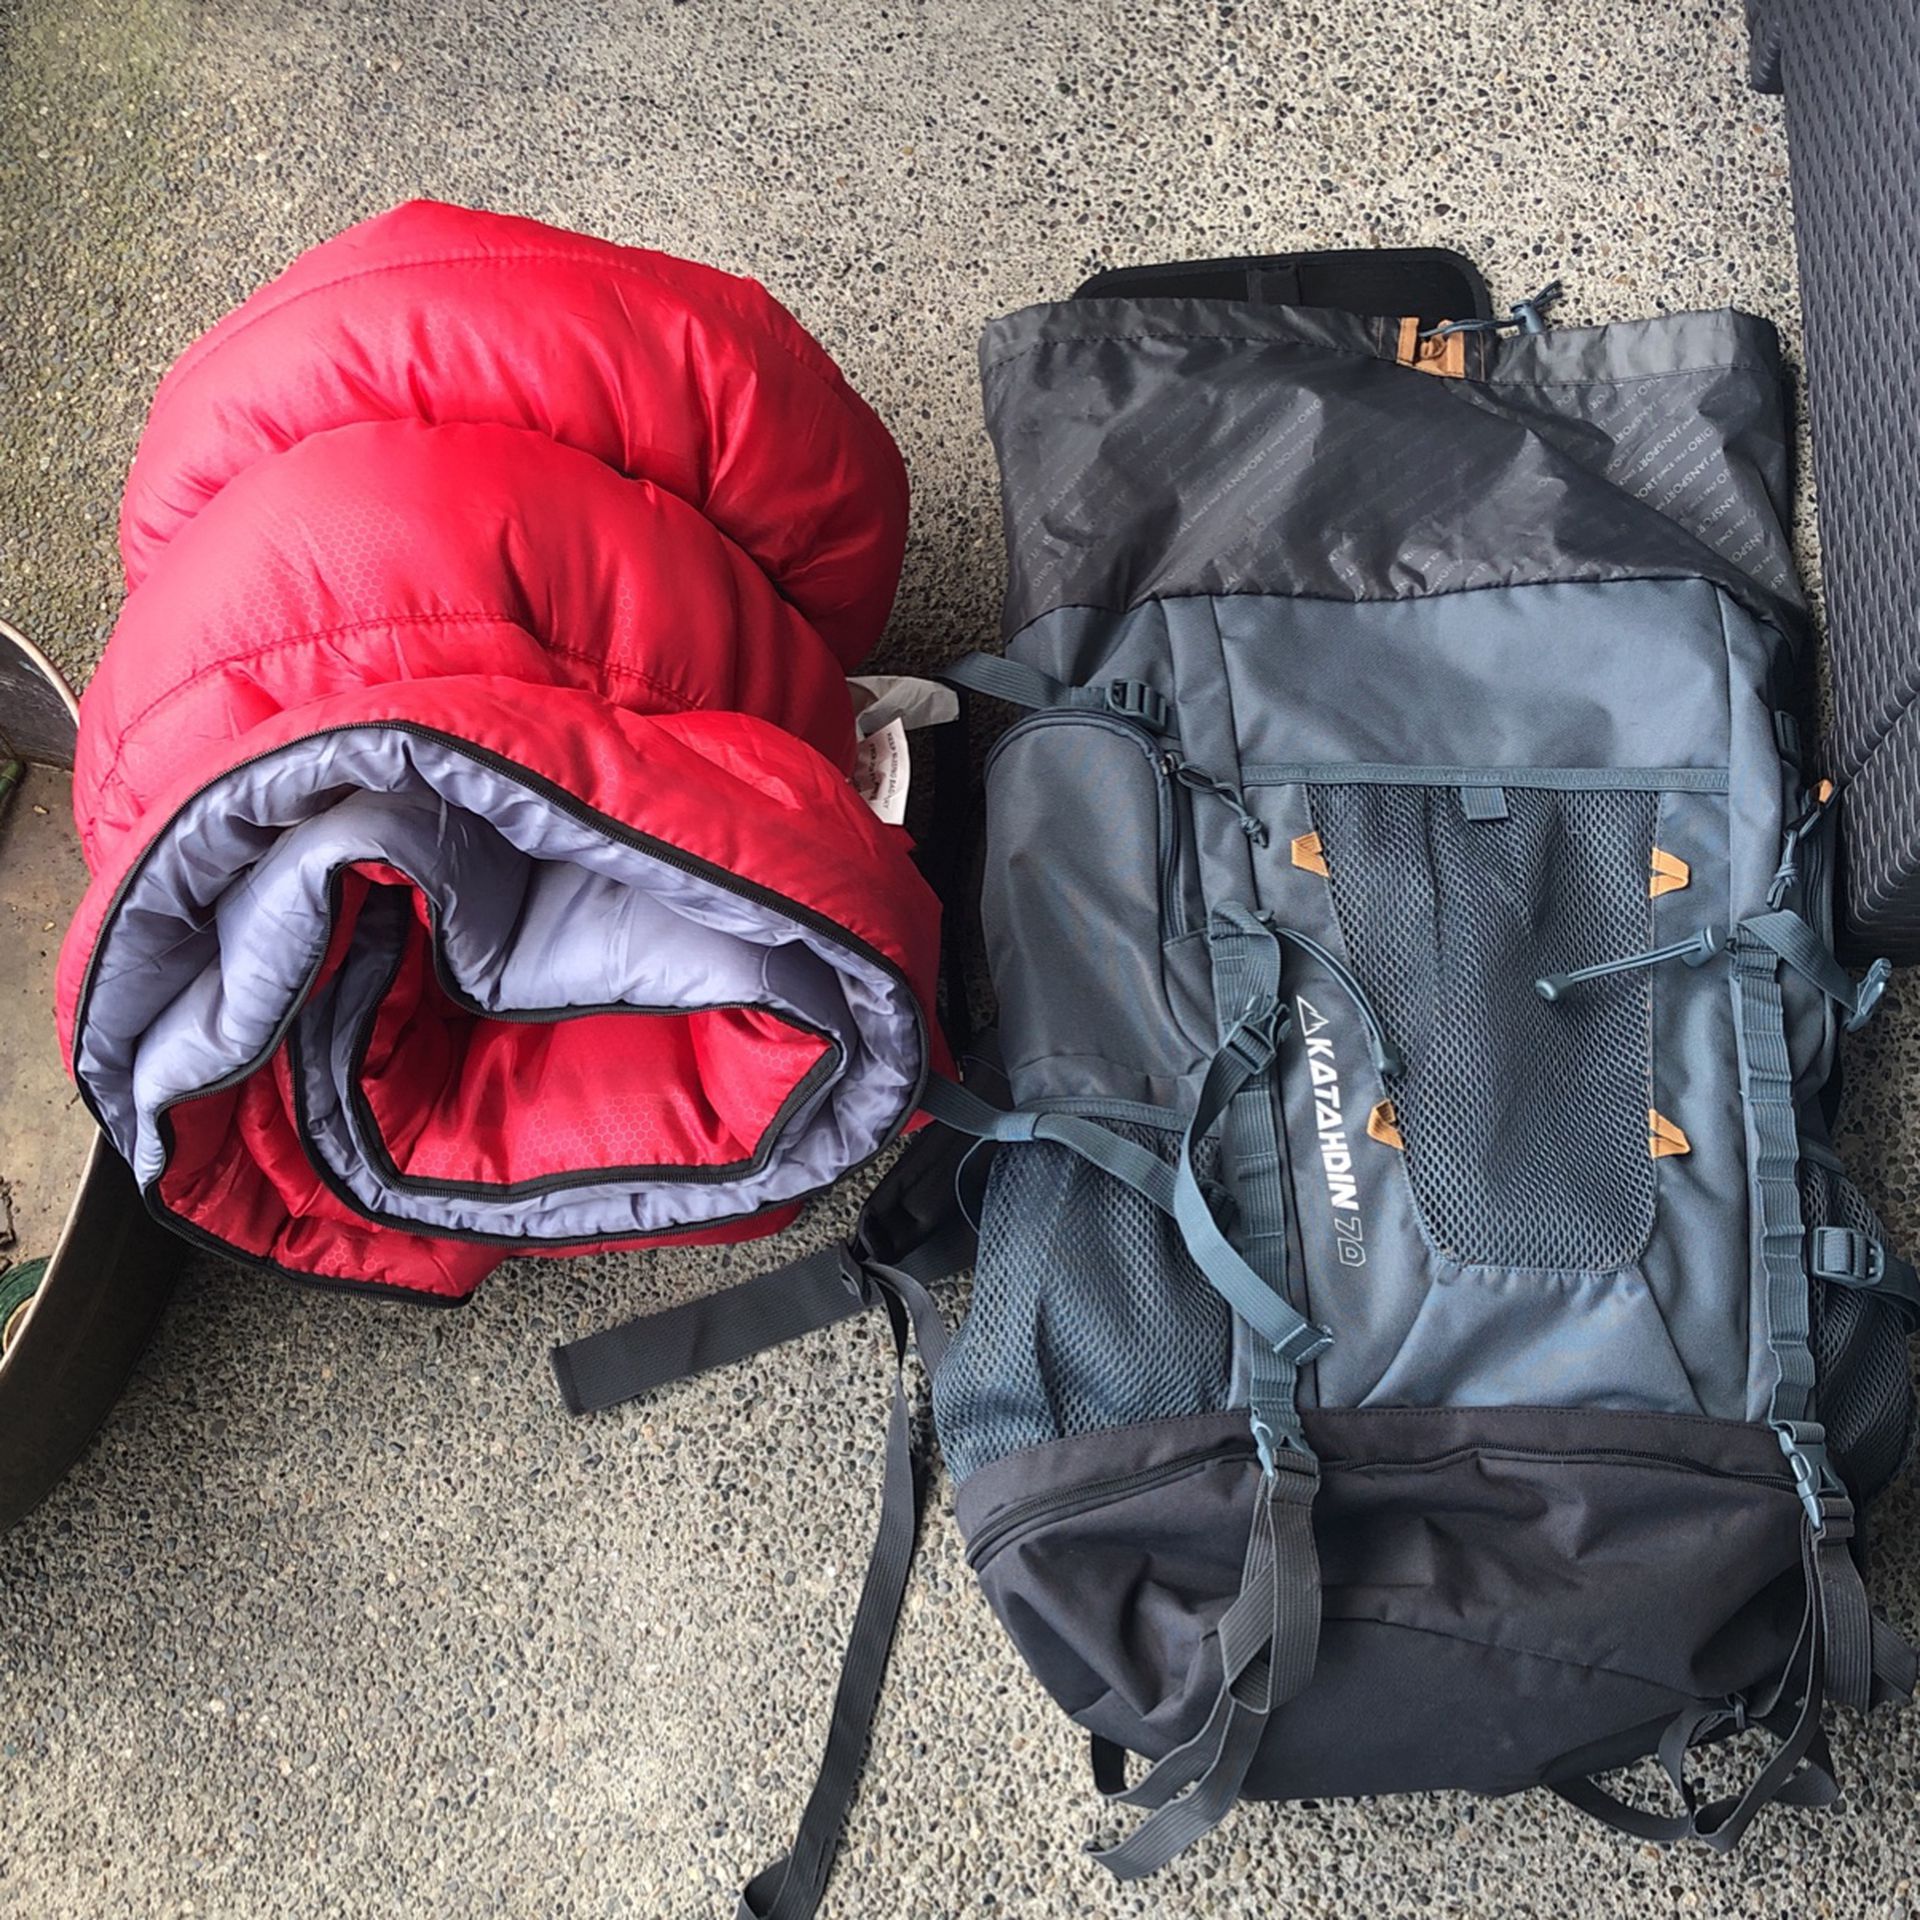 High Quality Backpack And Sleeping Bag! 